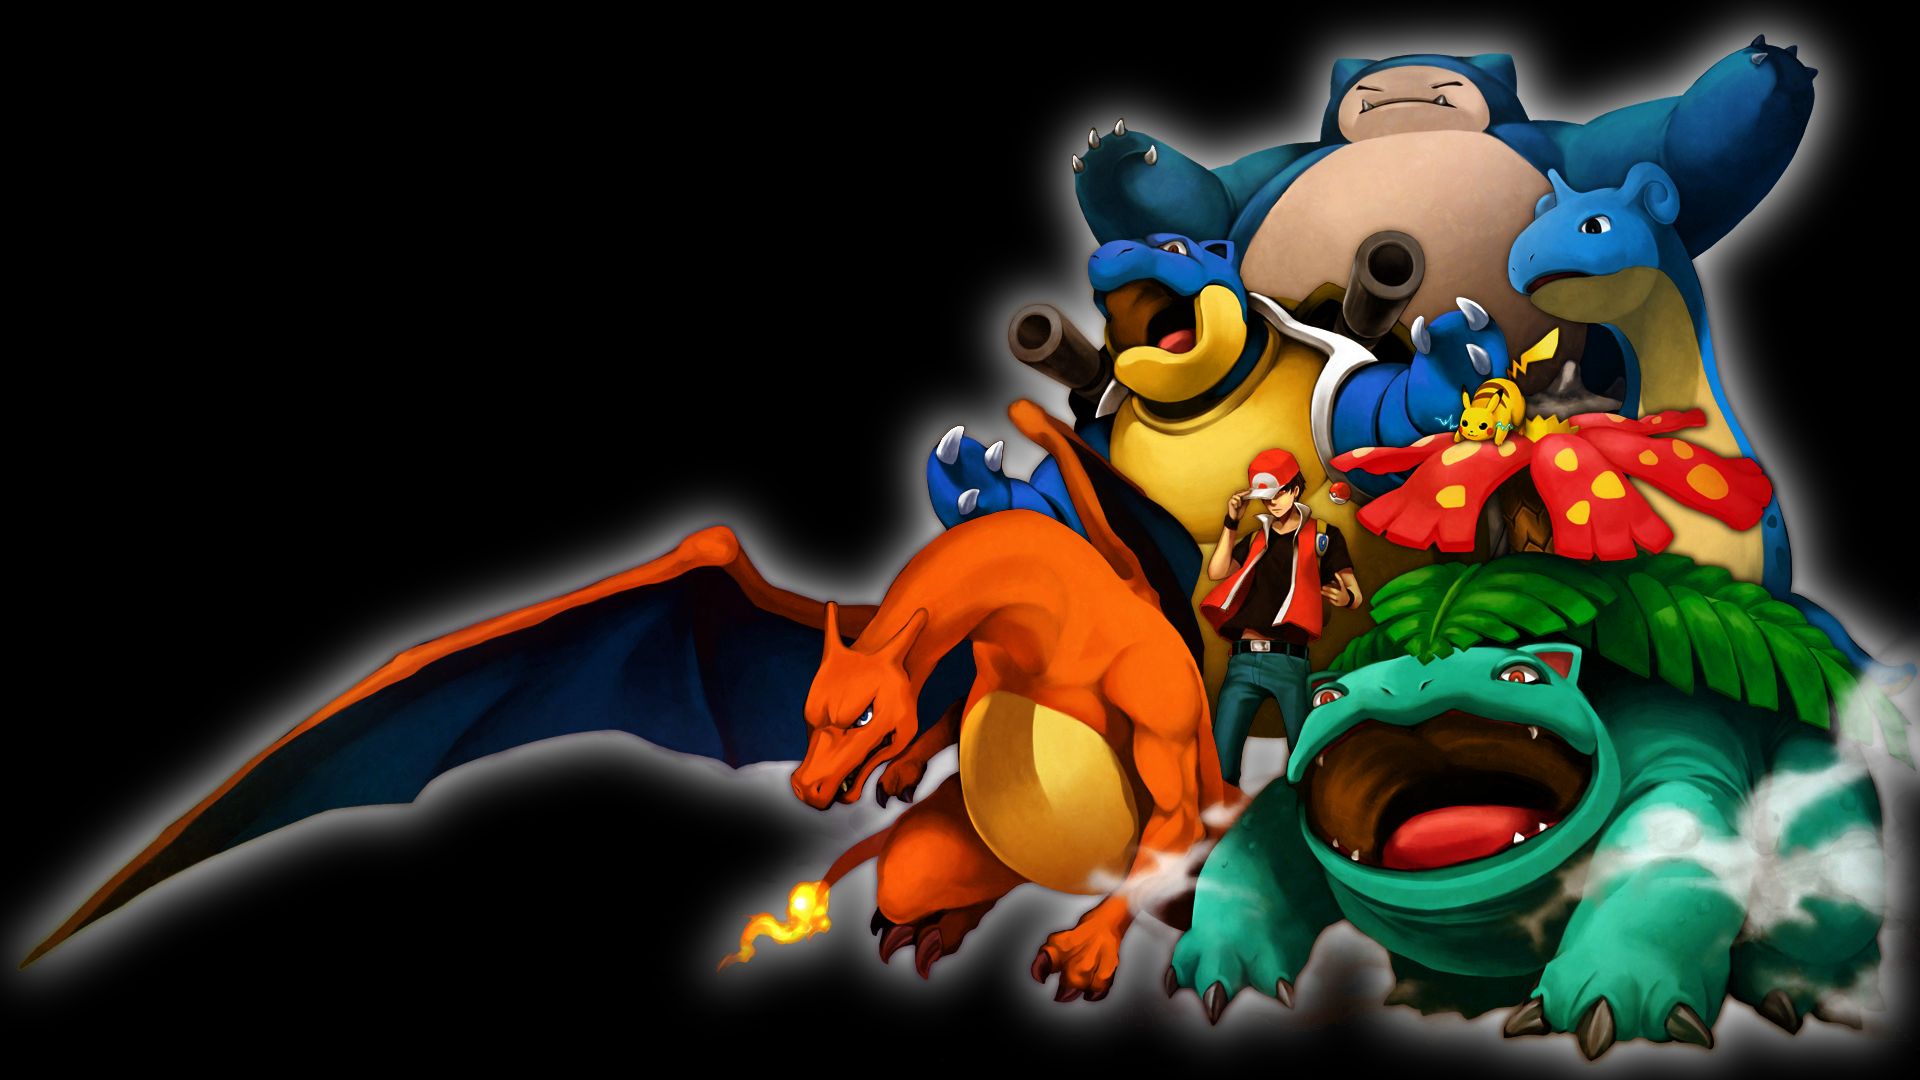 venusaur (pokémon), pokémon, pikachu, video game, pokemon: red and blue, blastoise (pokémon), charizard (pokémon), lapras (pokémon), red (pokémon), snorlax (pokémon) Full HD